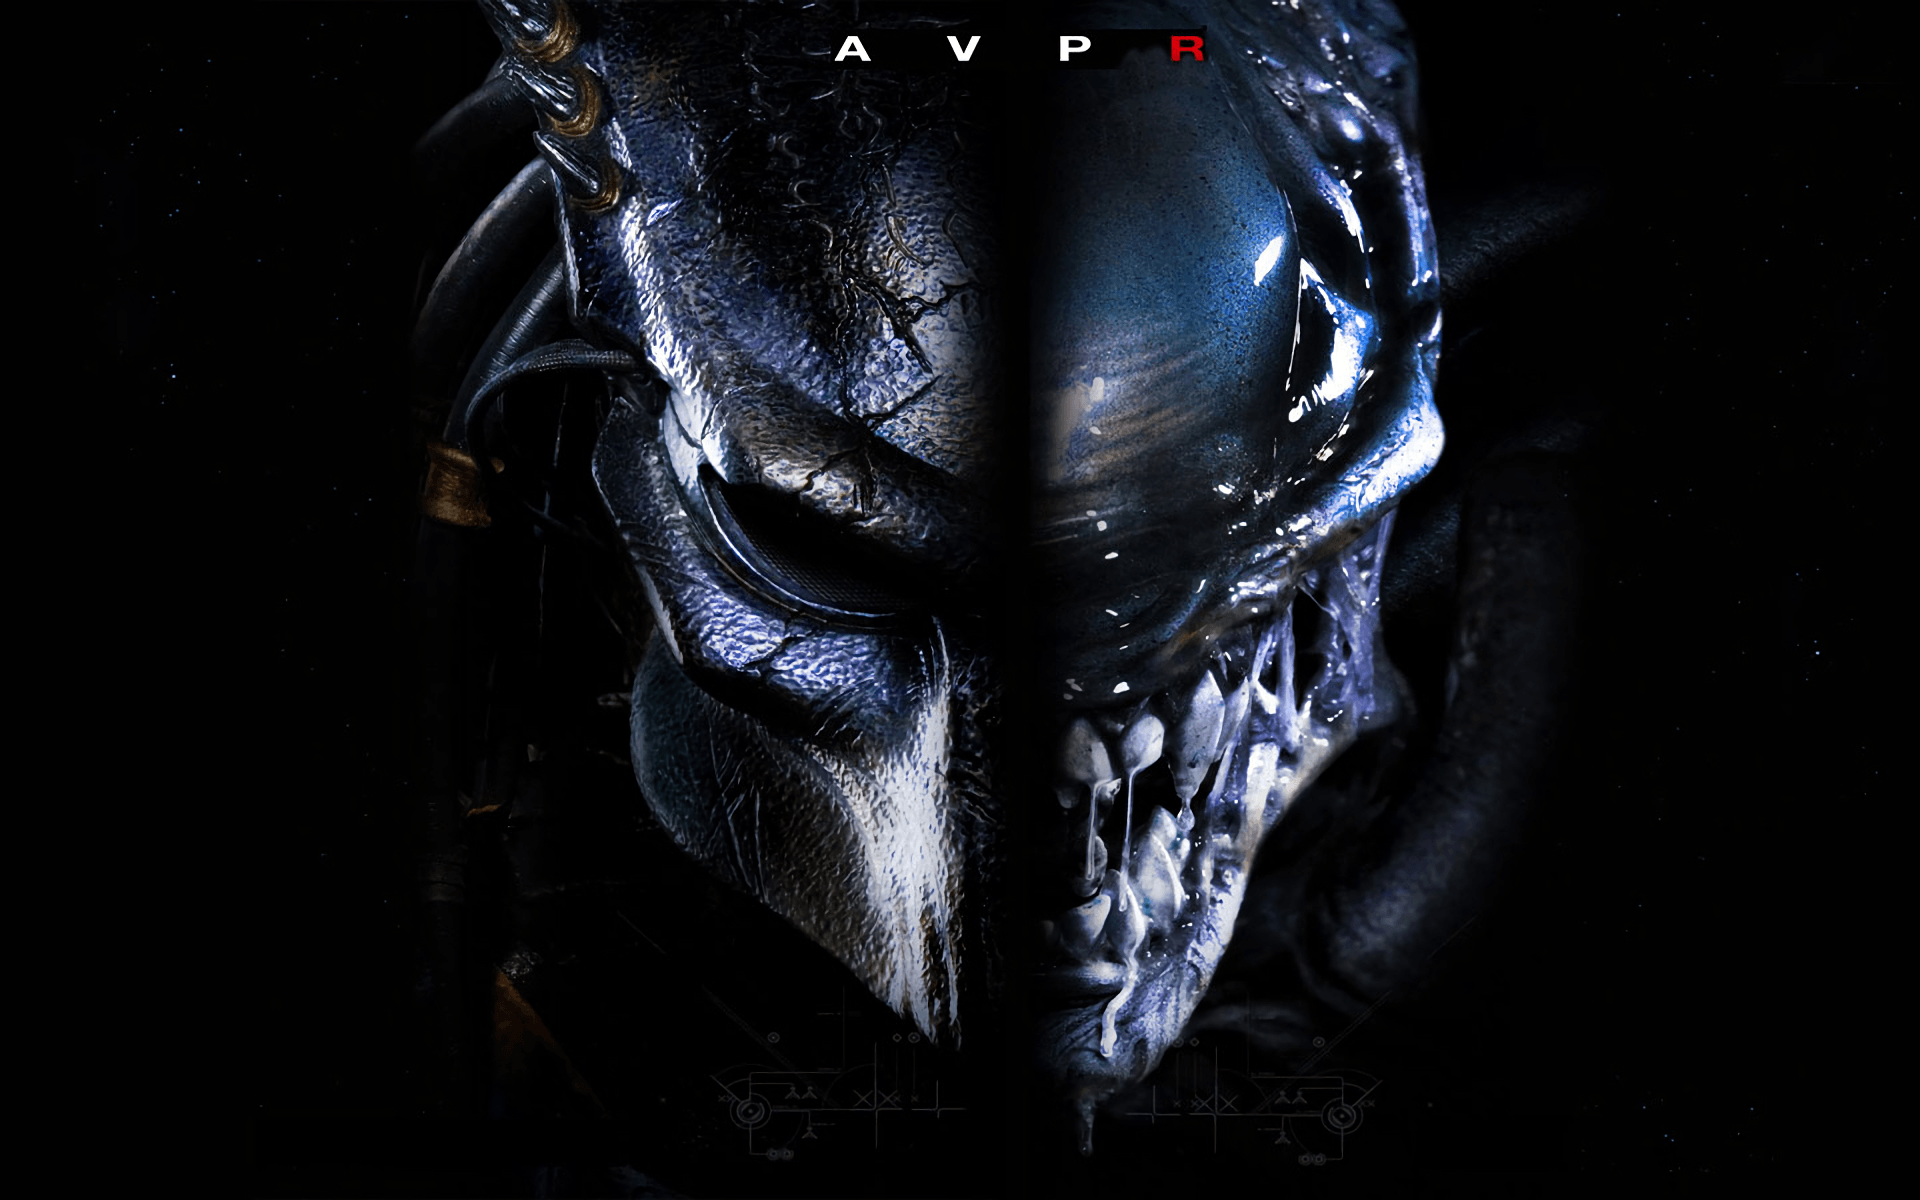 Aliens vs predator background - Cool for me!, Alien Predator HD wallpaper